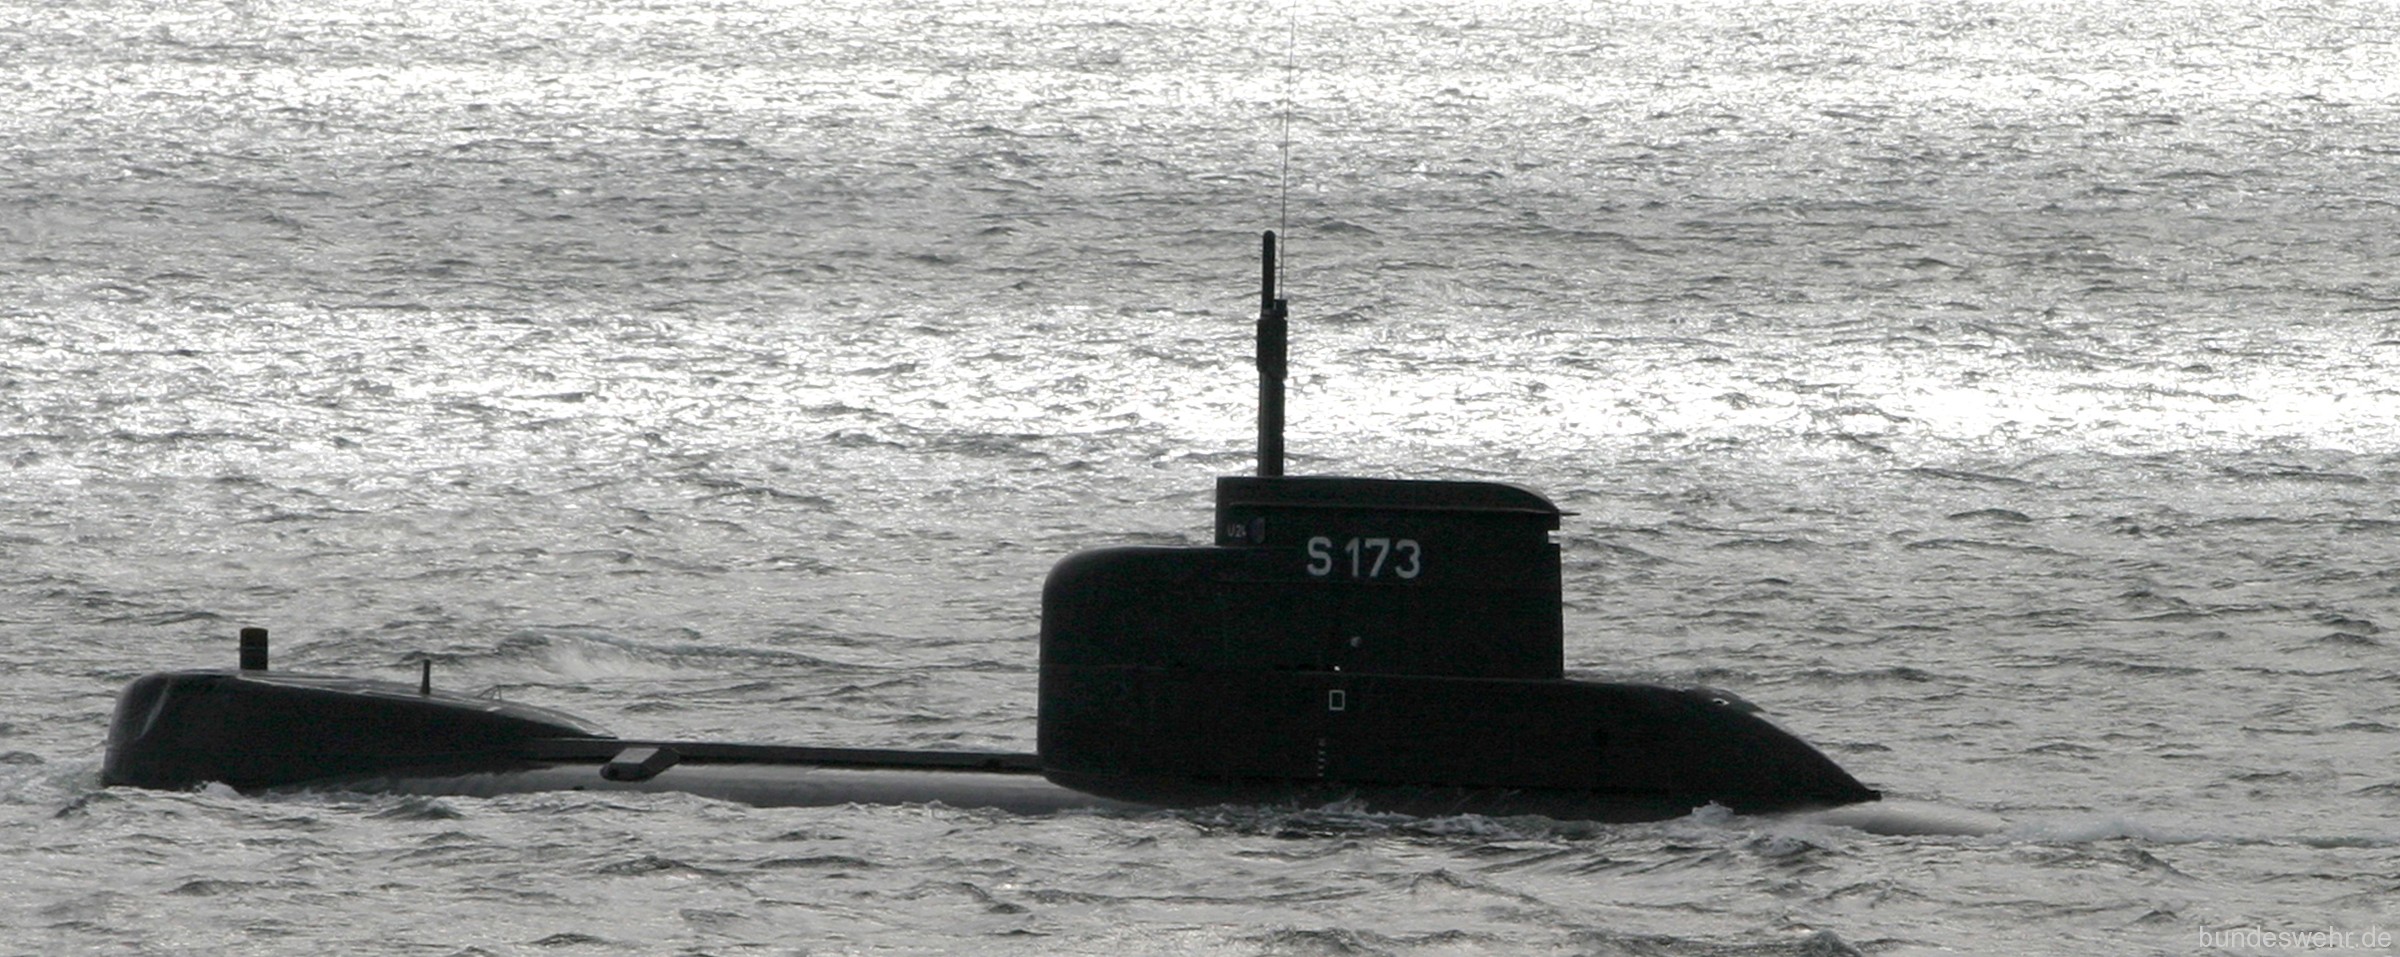 s-173 fgs u24 type 206 class submarine german navy 07